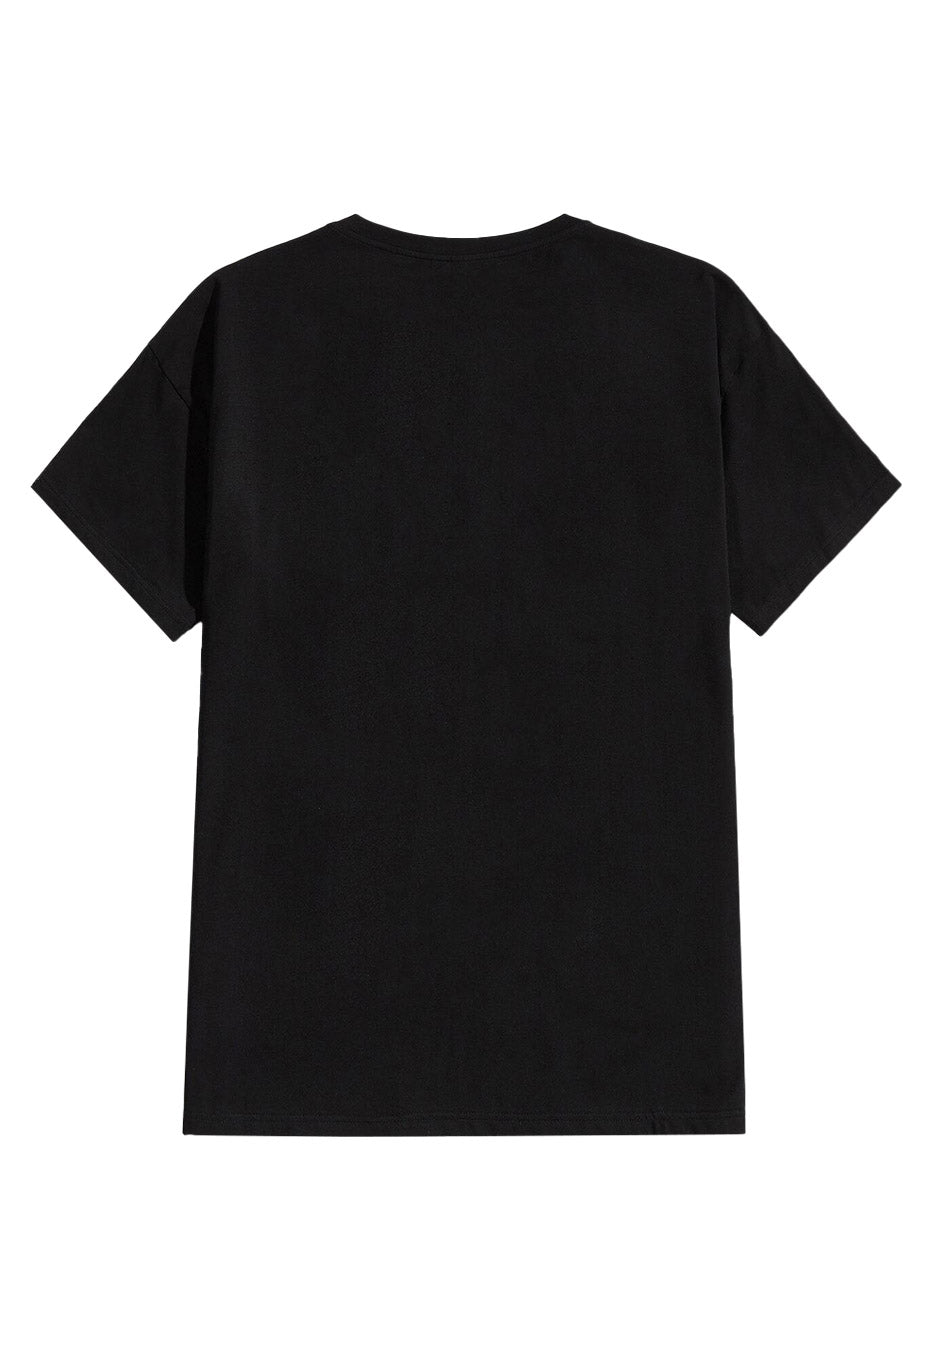 Rob Zombie - Baphomet Pentagram - T-Shirt